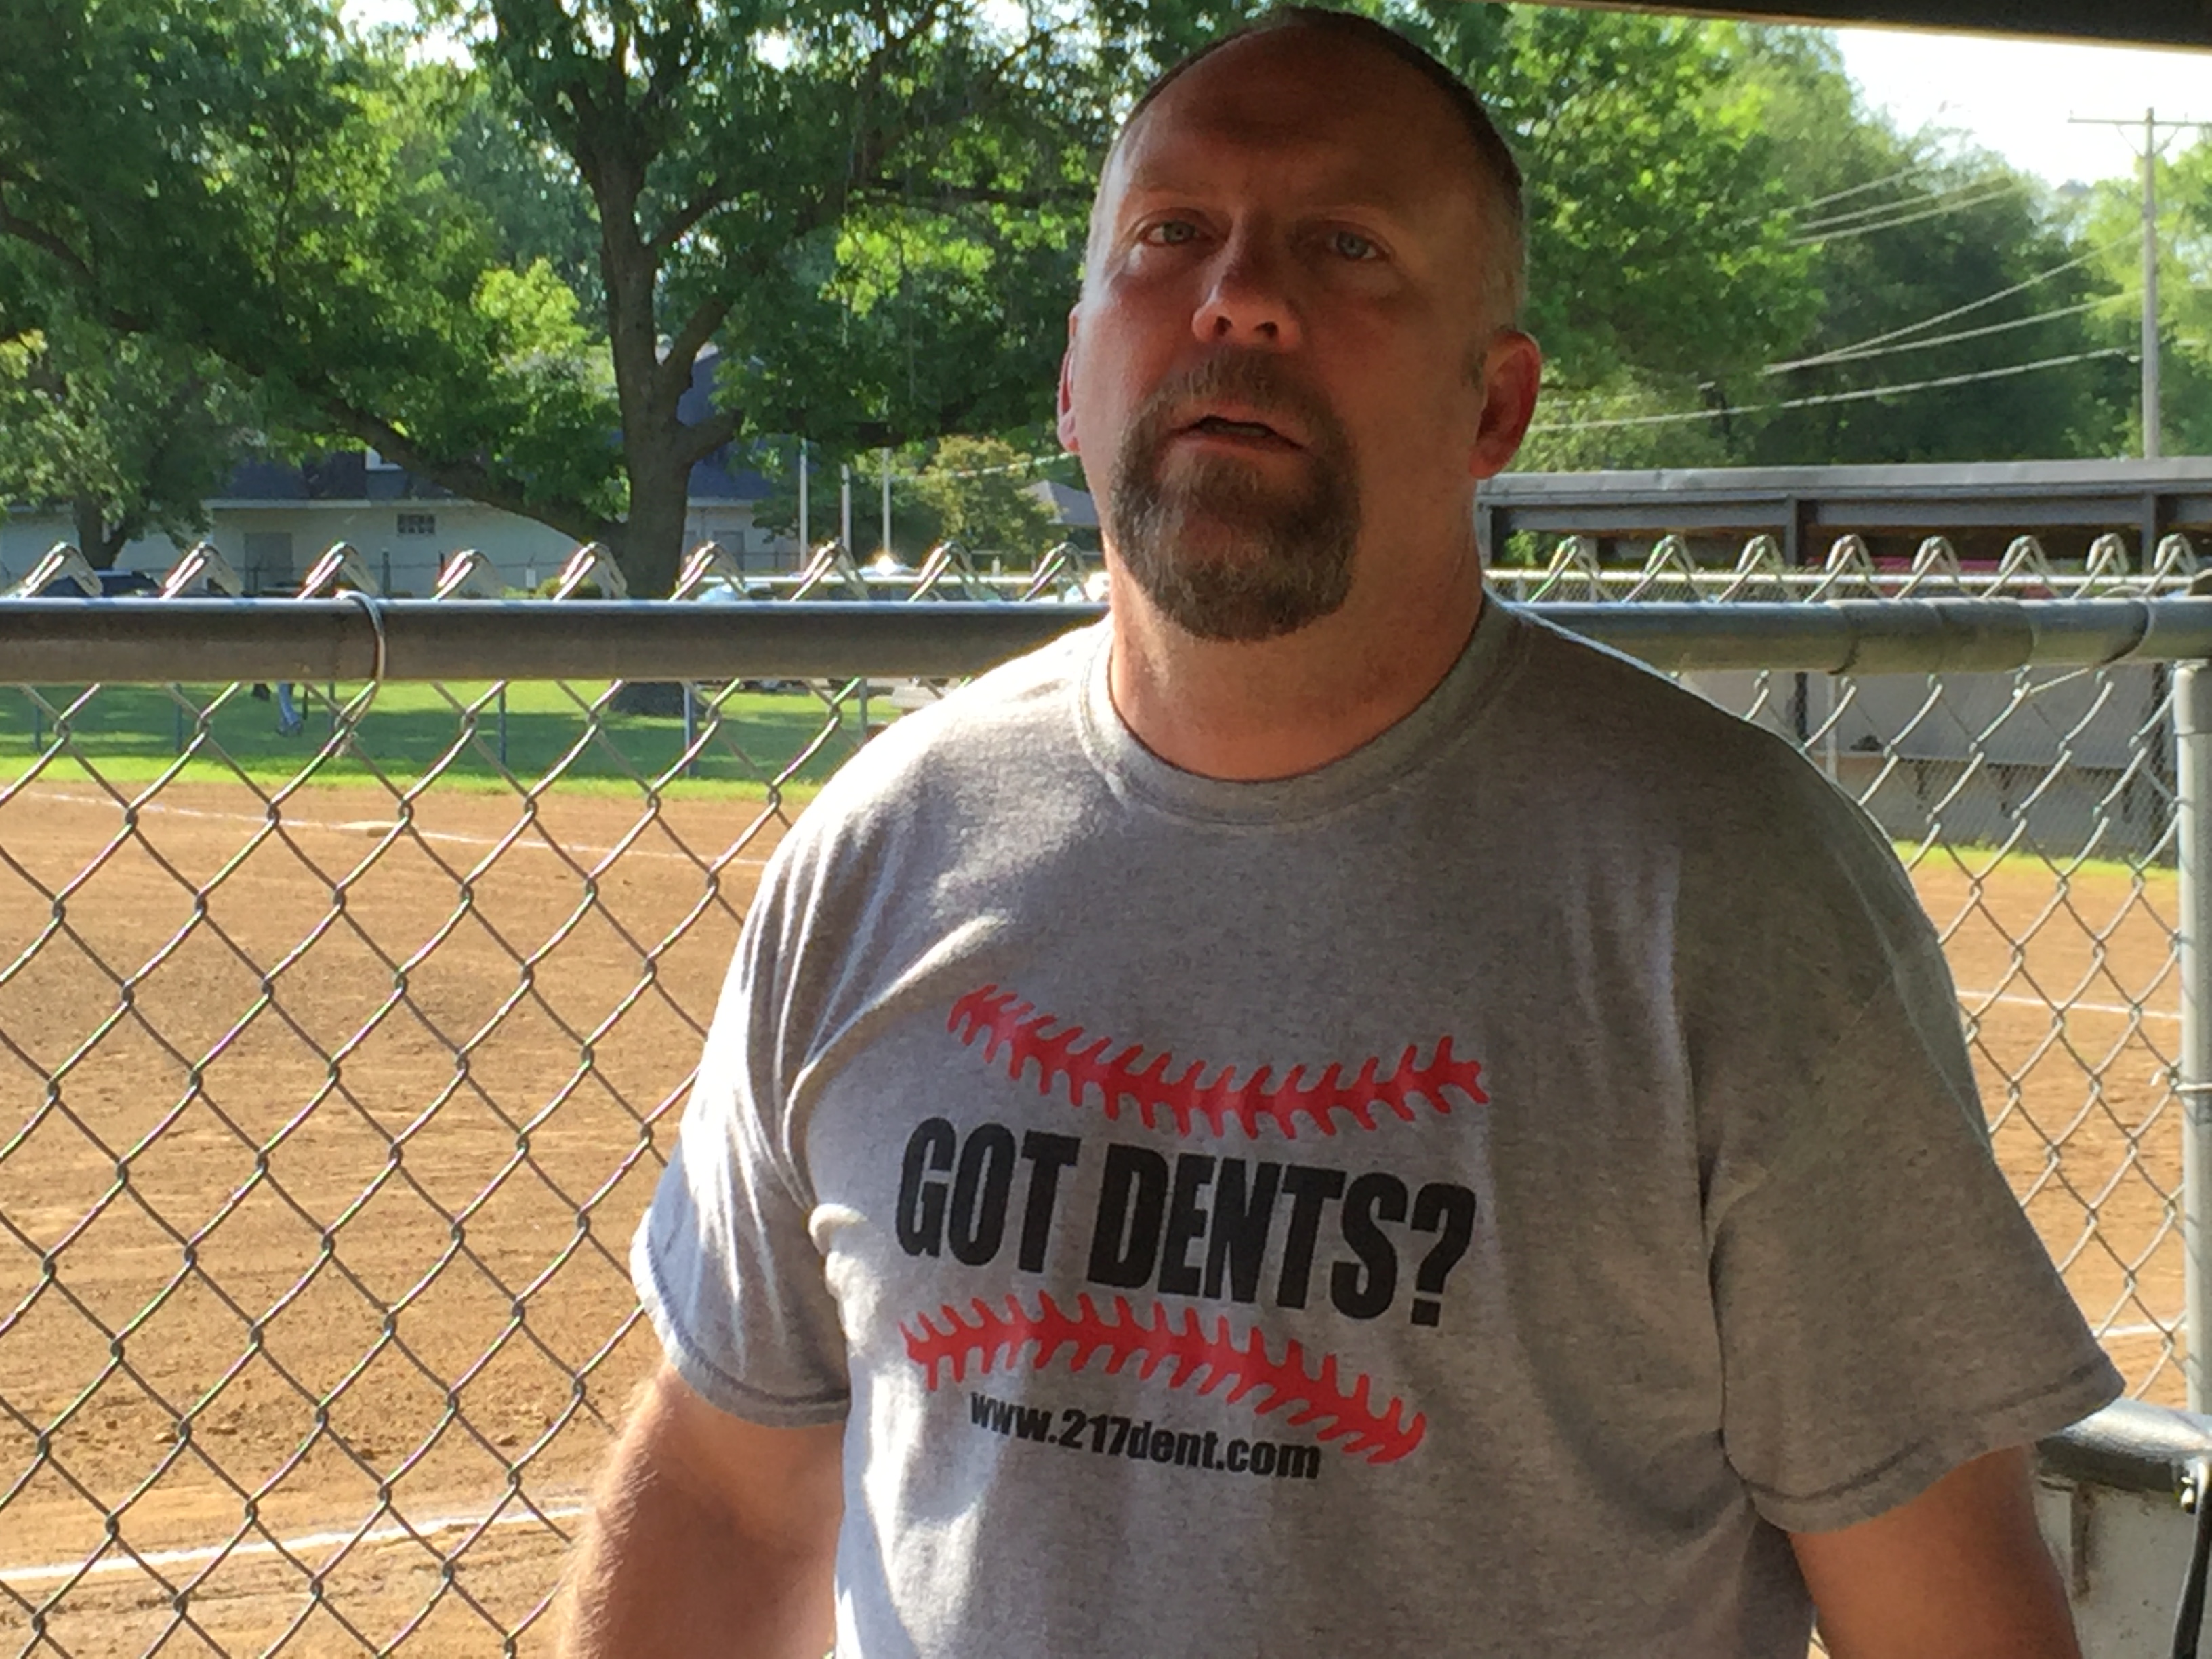 https://217dent.com Team Sponsor, Springfield, IL. Game 3 Tournament. Got Dents Baseball team.